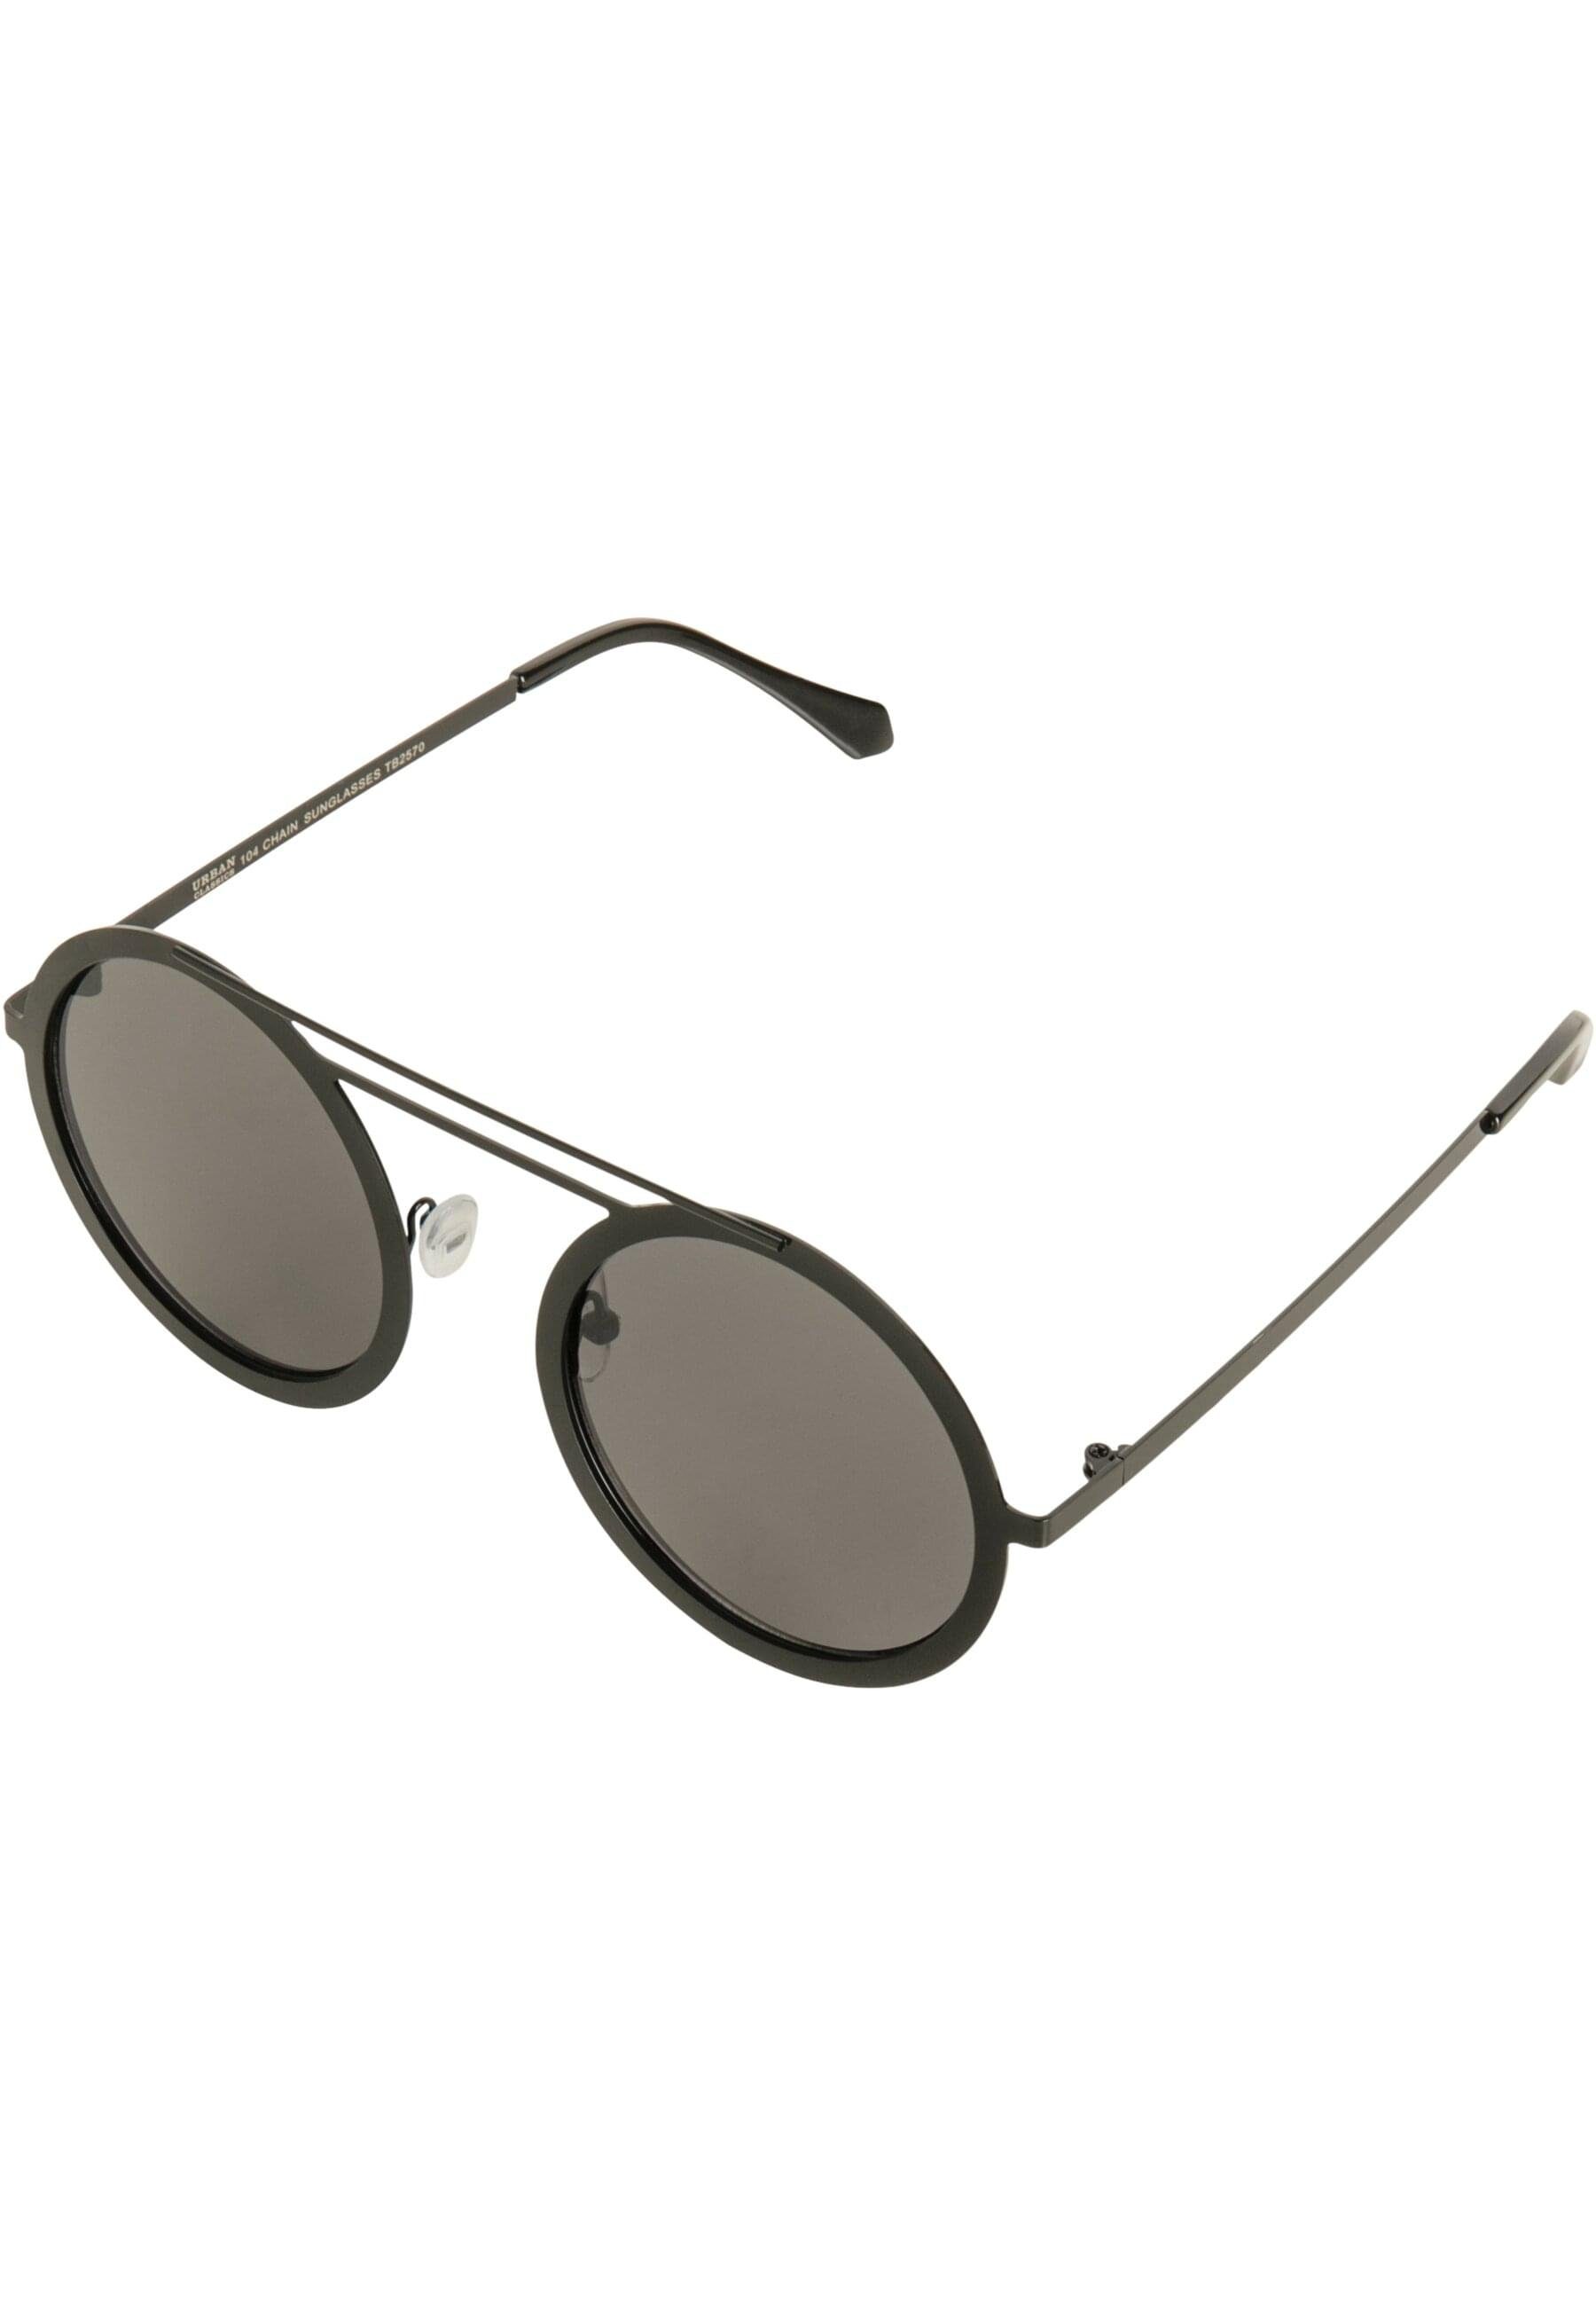 Sonnenbrille black/black Sunglasses CLASSICS Unisex Chain 104 URBAN